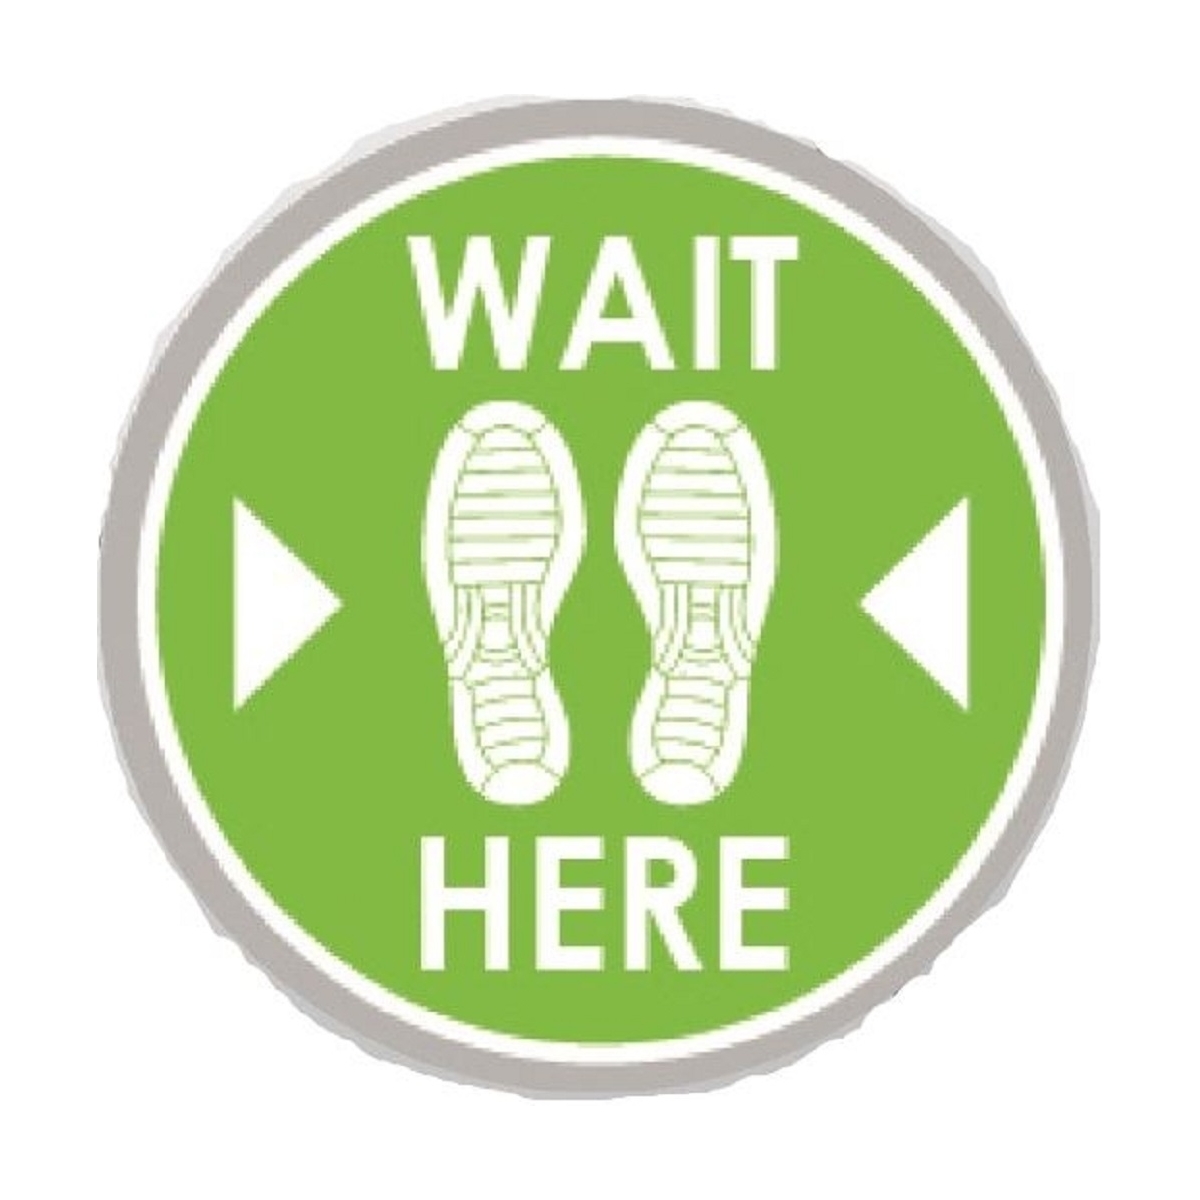 Wait here